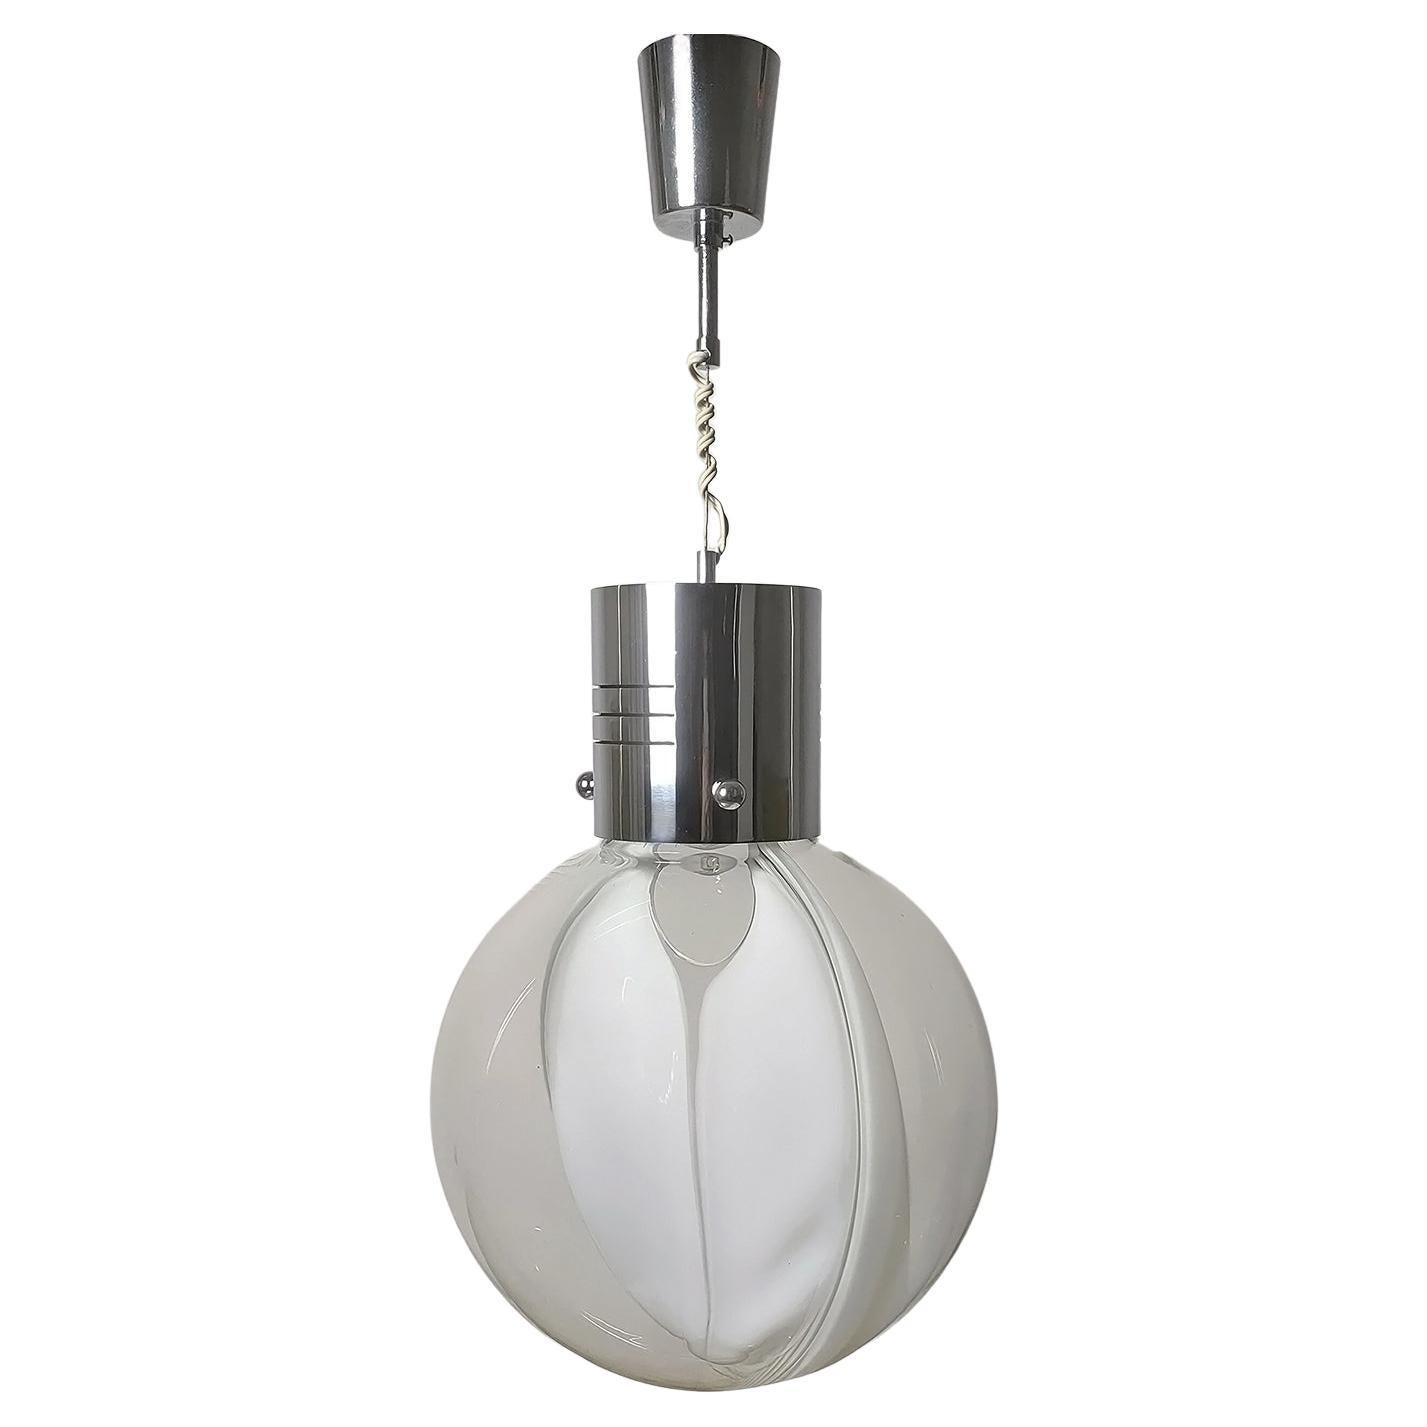 Toni Zuccheri Membrana Ceiling Lamp in Murano Glass by Venini 1960s Italy